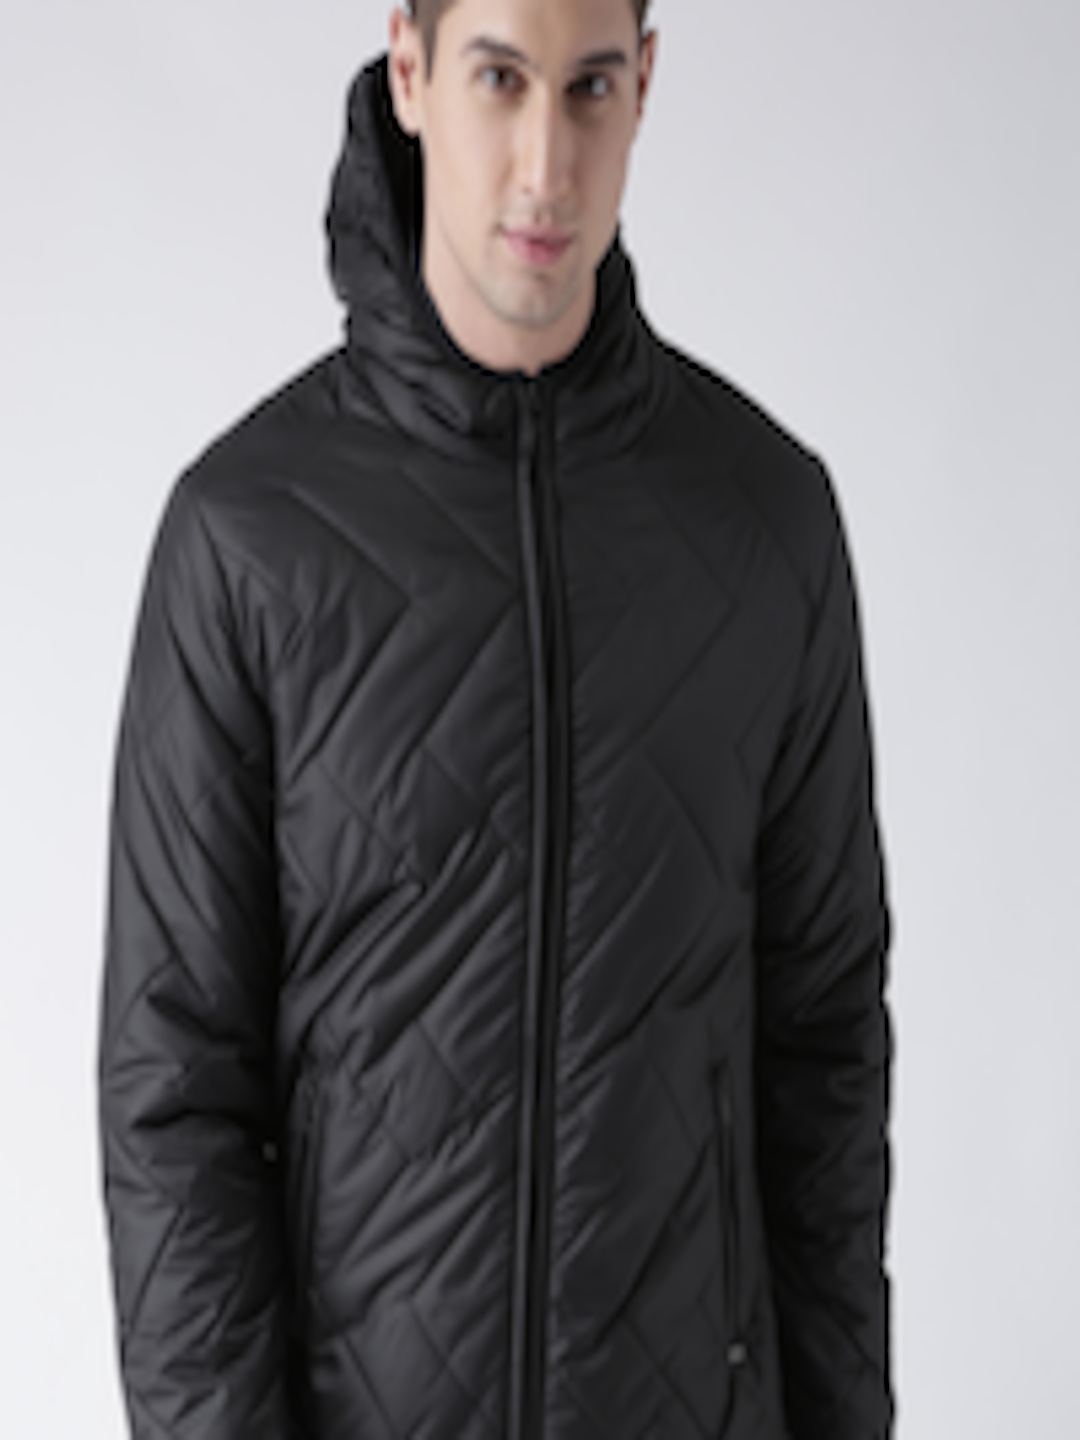 Buy Numero Uno Men Black Quilted Jacket - Jackets for Men 2337160 | Myntra